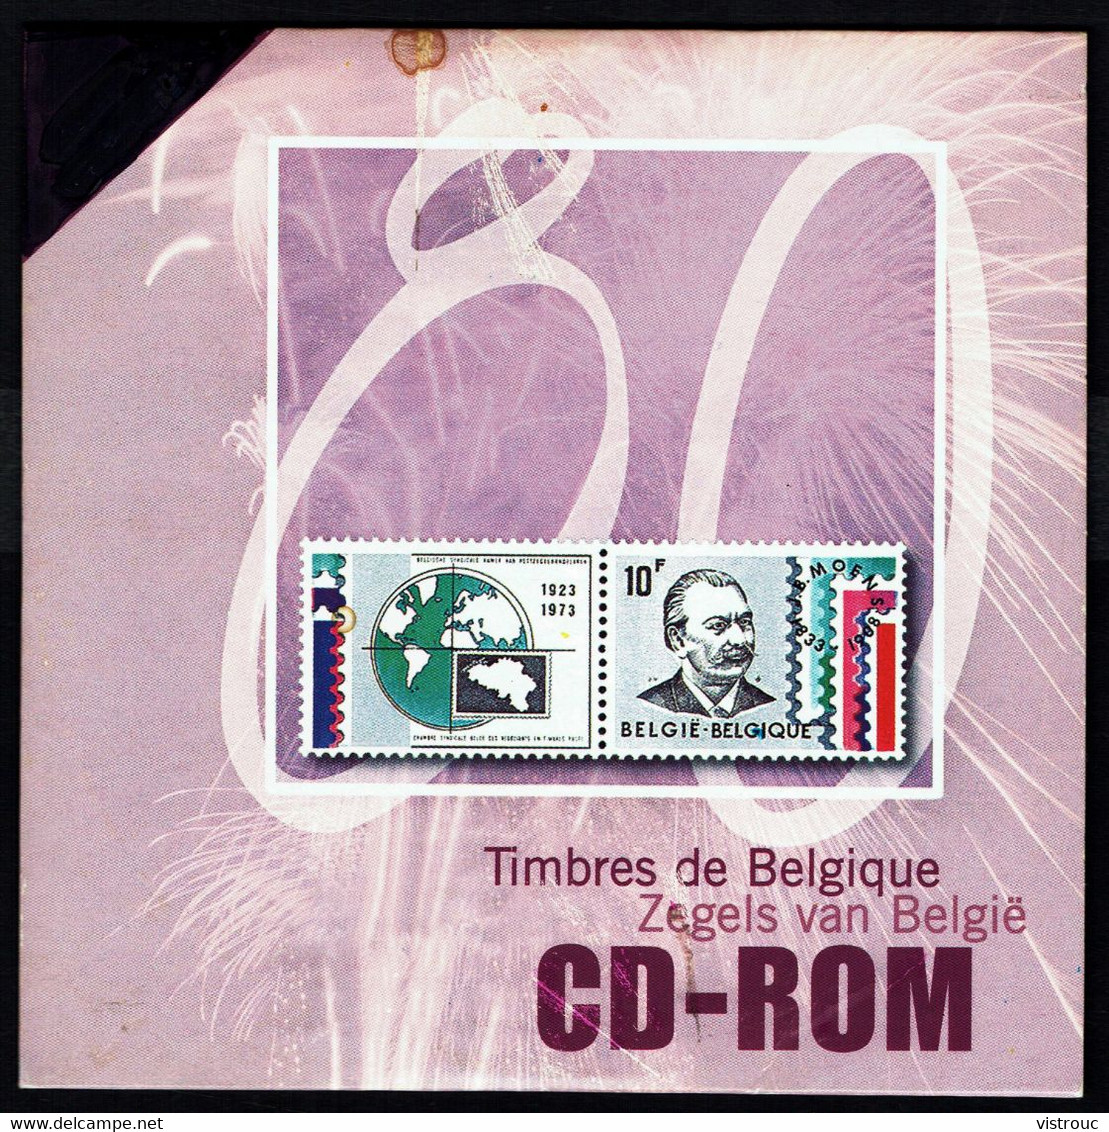 CD ROM "TIMBRES DE BELGIQUE". - Französisch